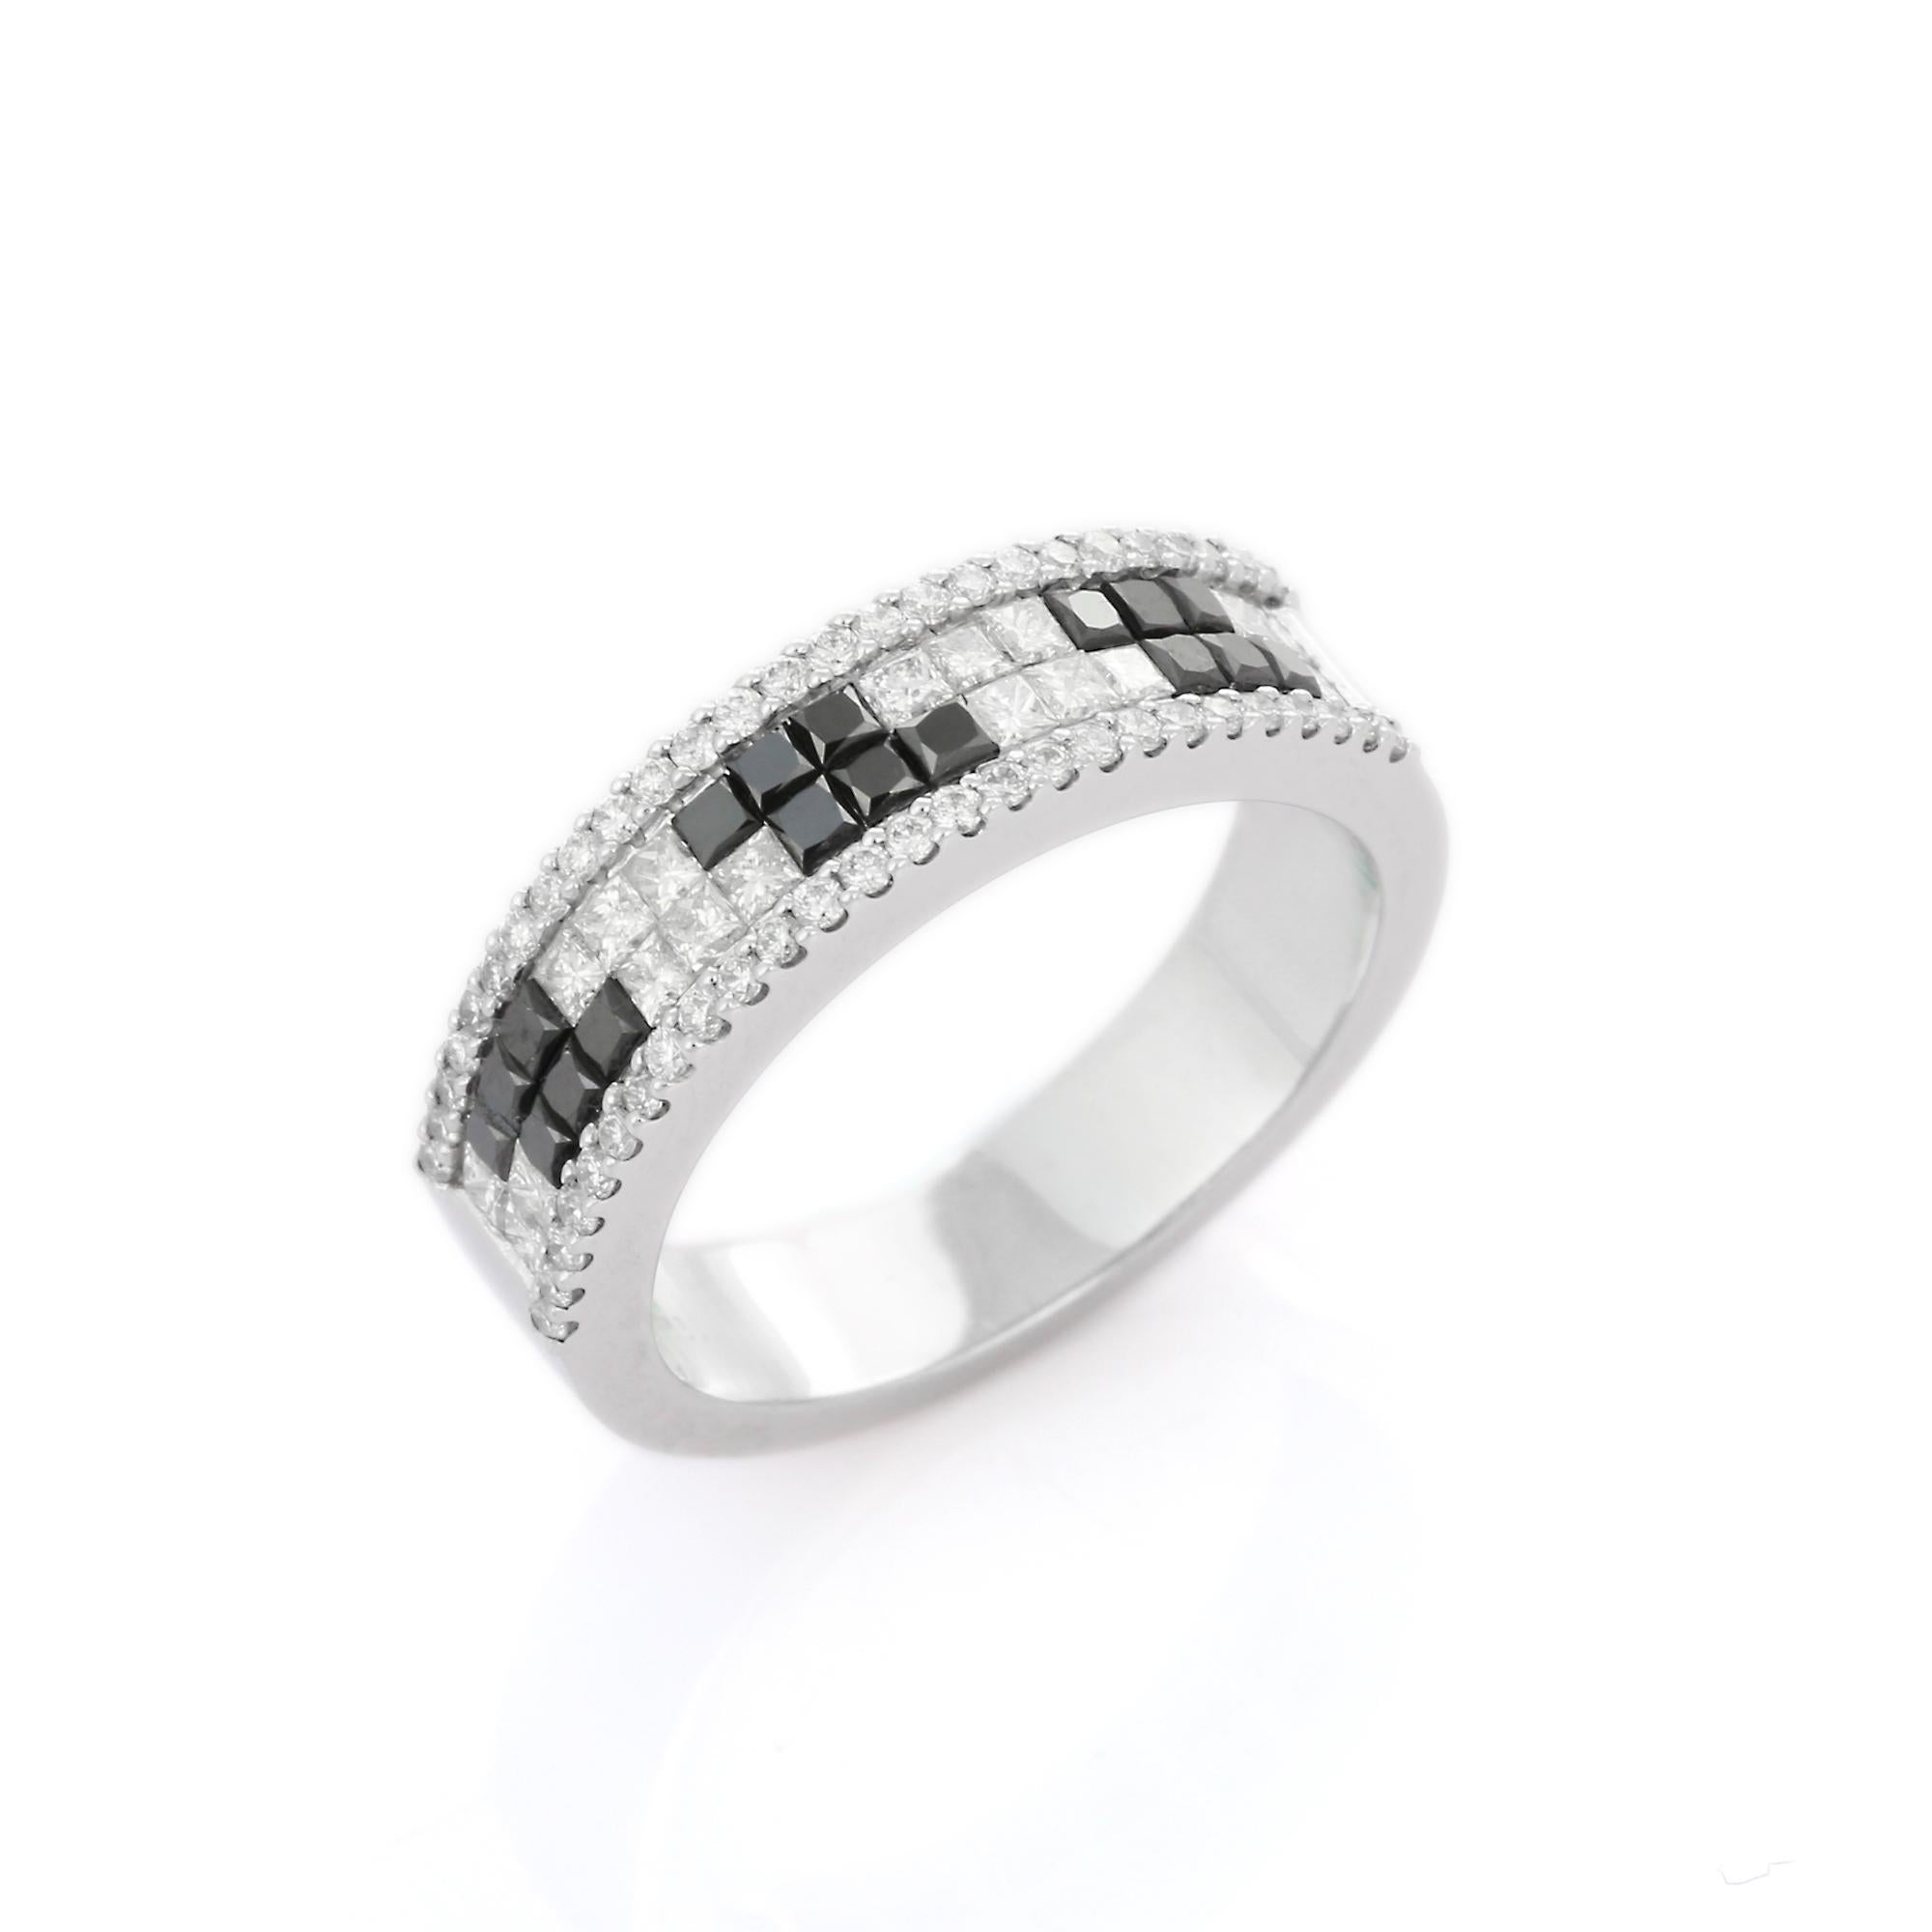 For Sale:  Unisex Black White Diamond Engagement Band Ring Gift for Him in 18k White Gold  2